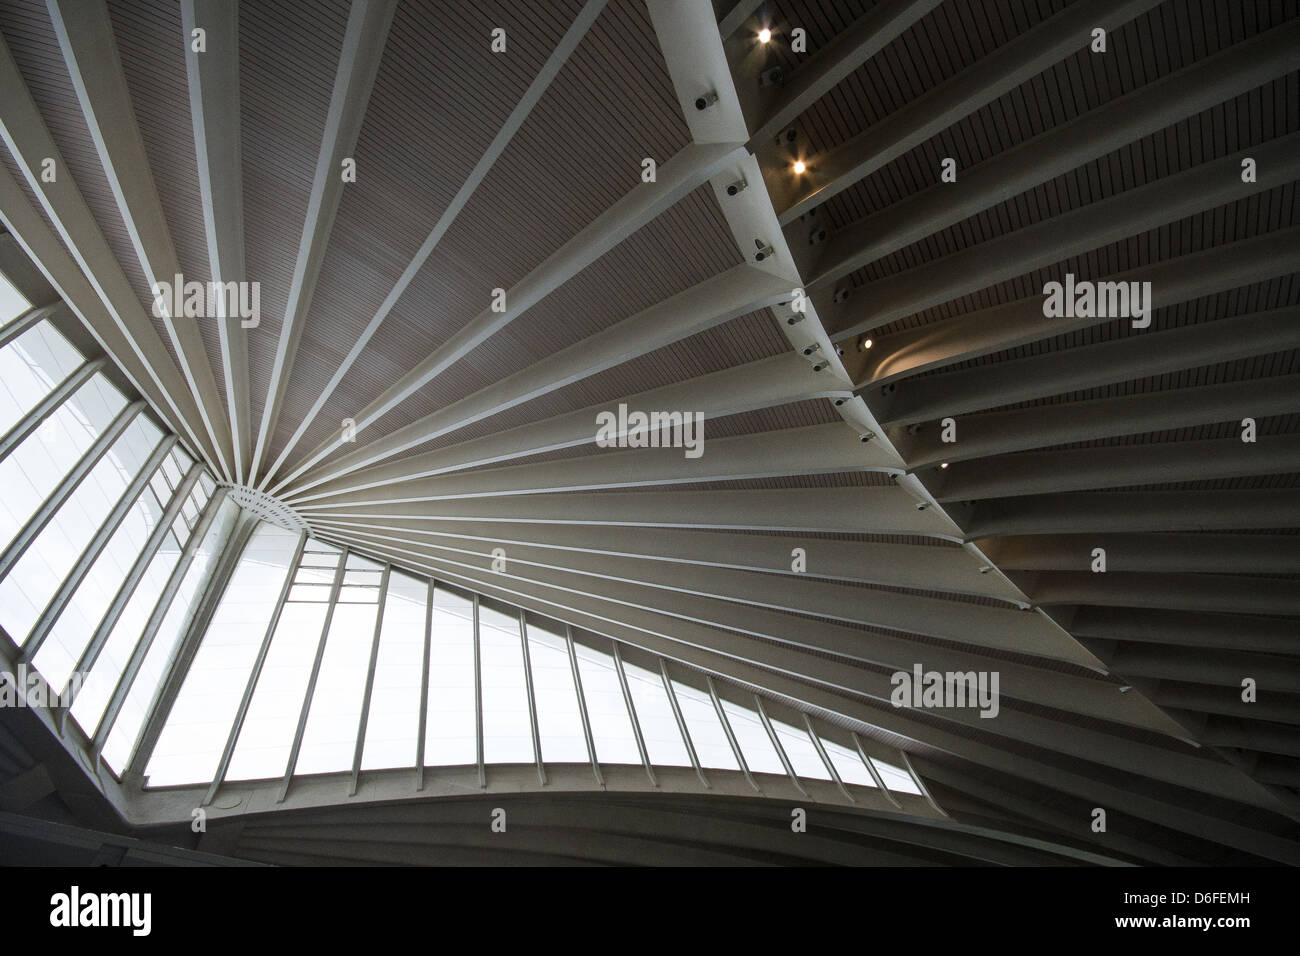 The sleek interior design of Bilbao airport, designed by Spanish architect Santiago Calatrava Stock Photo